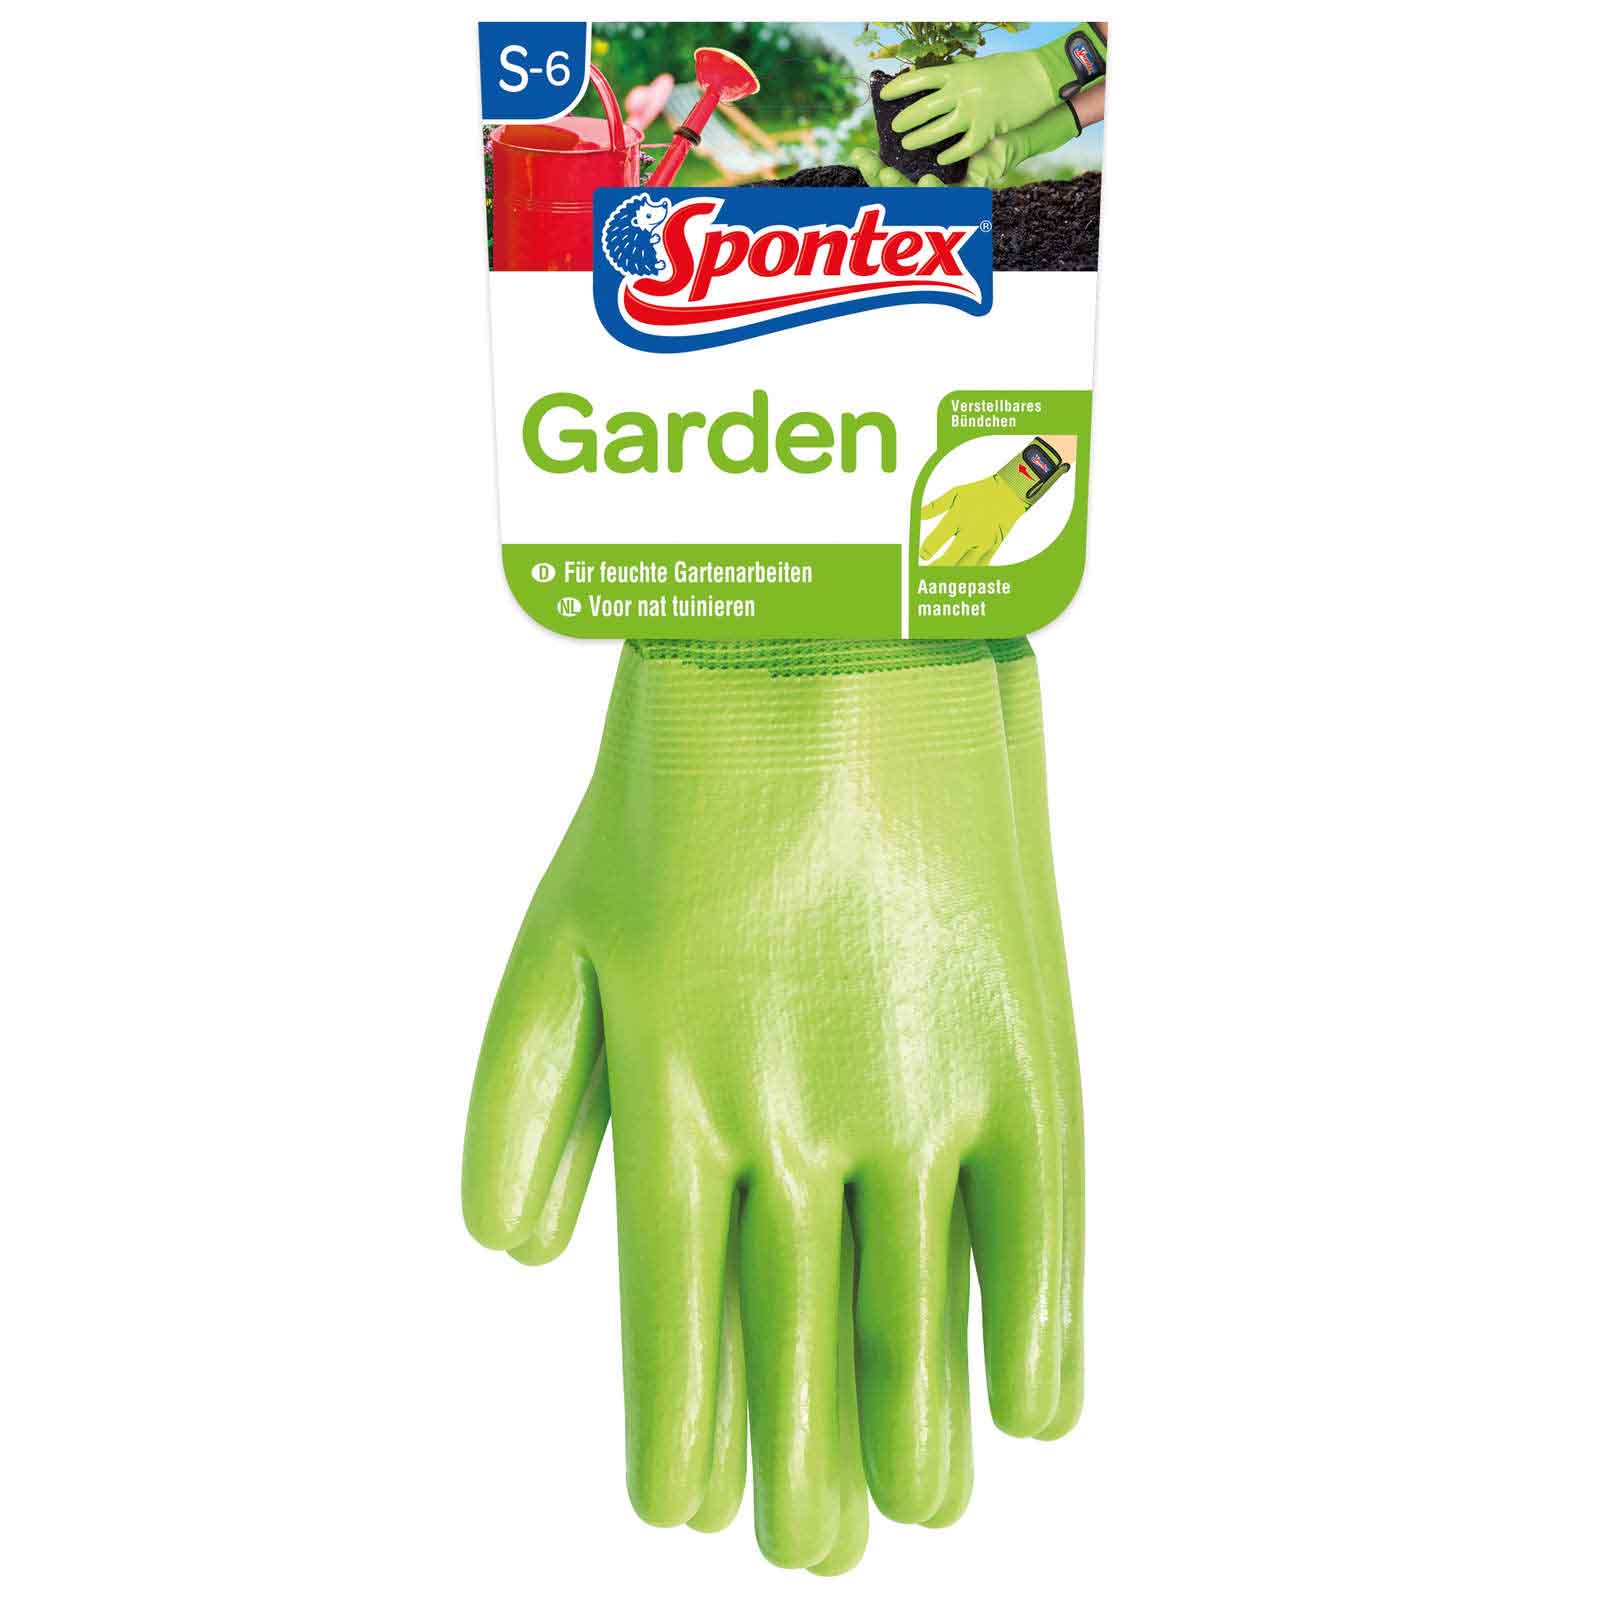 Spontex Gartenhandschuhe Garden Damenhandschuh Gartenarbeit Klettverschluss Größe:6 von Spontex